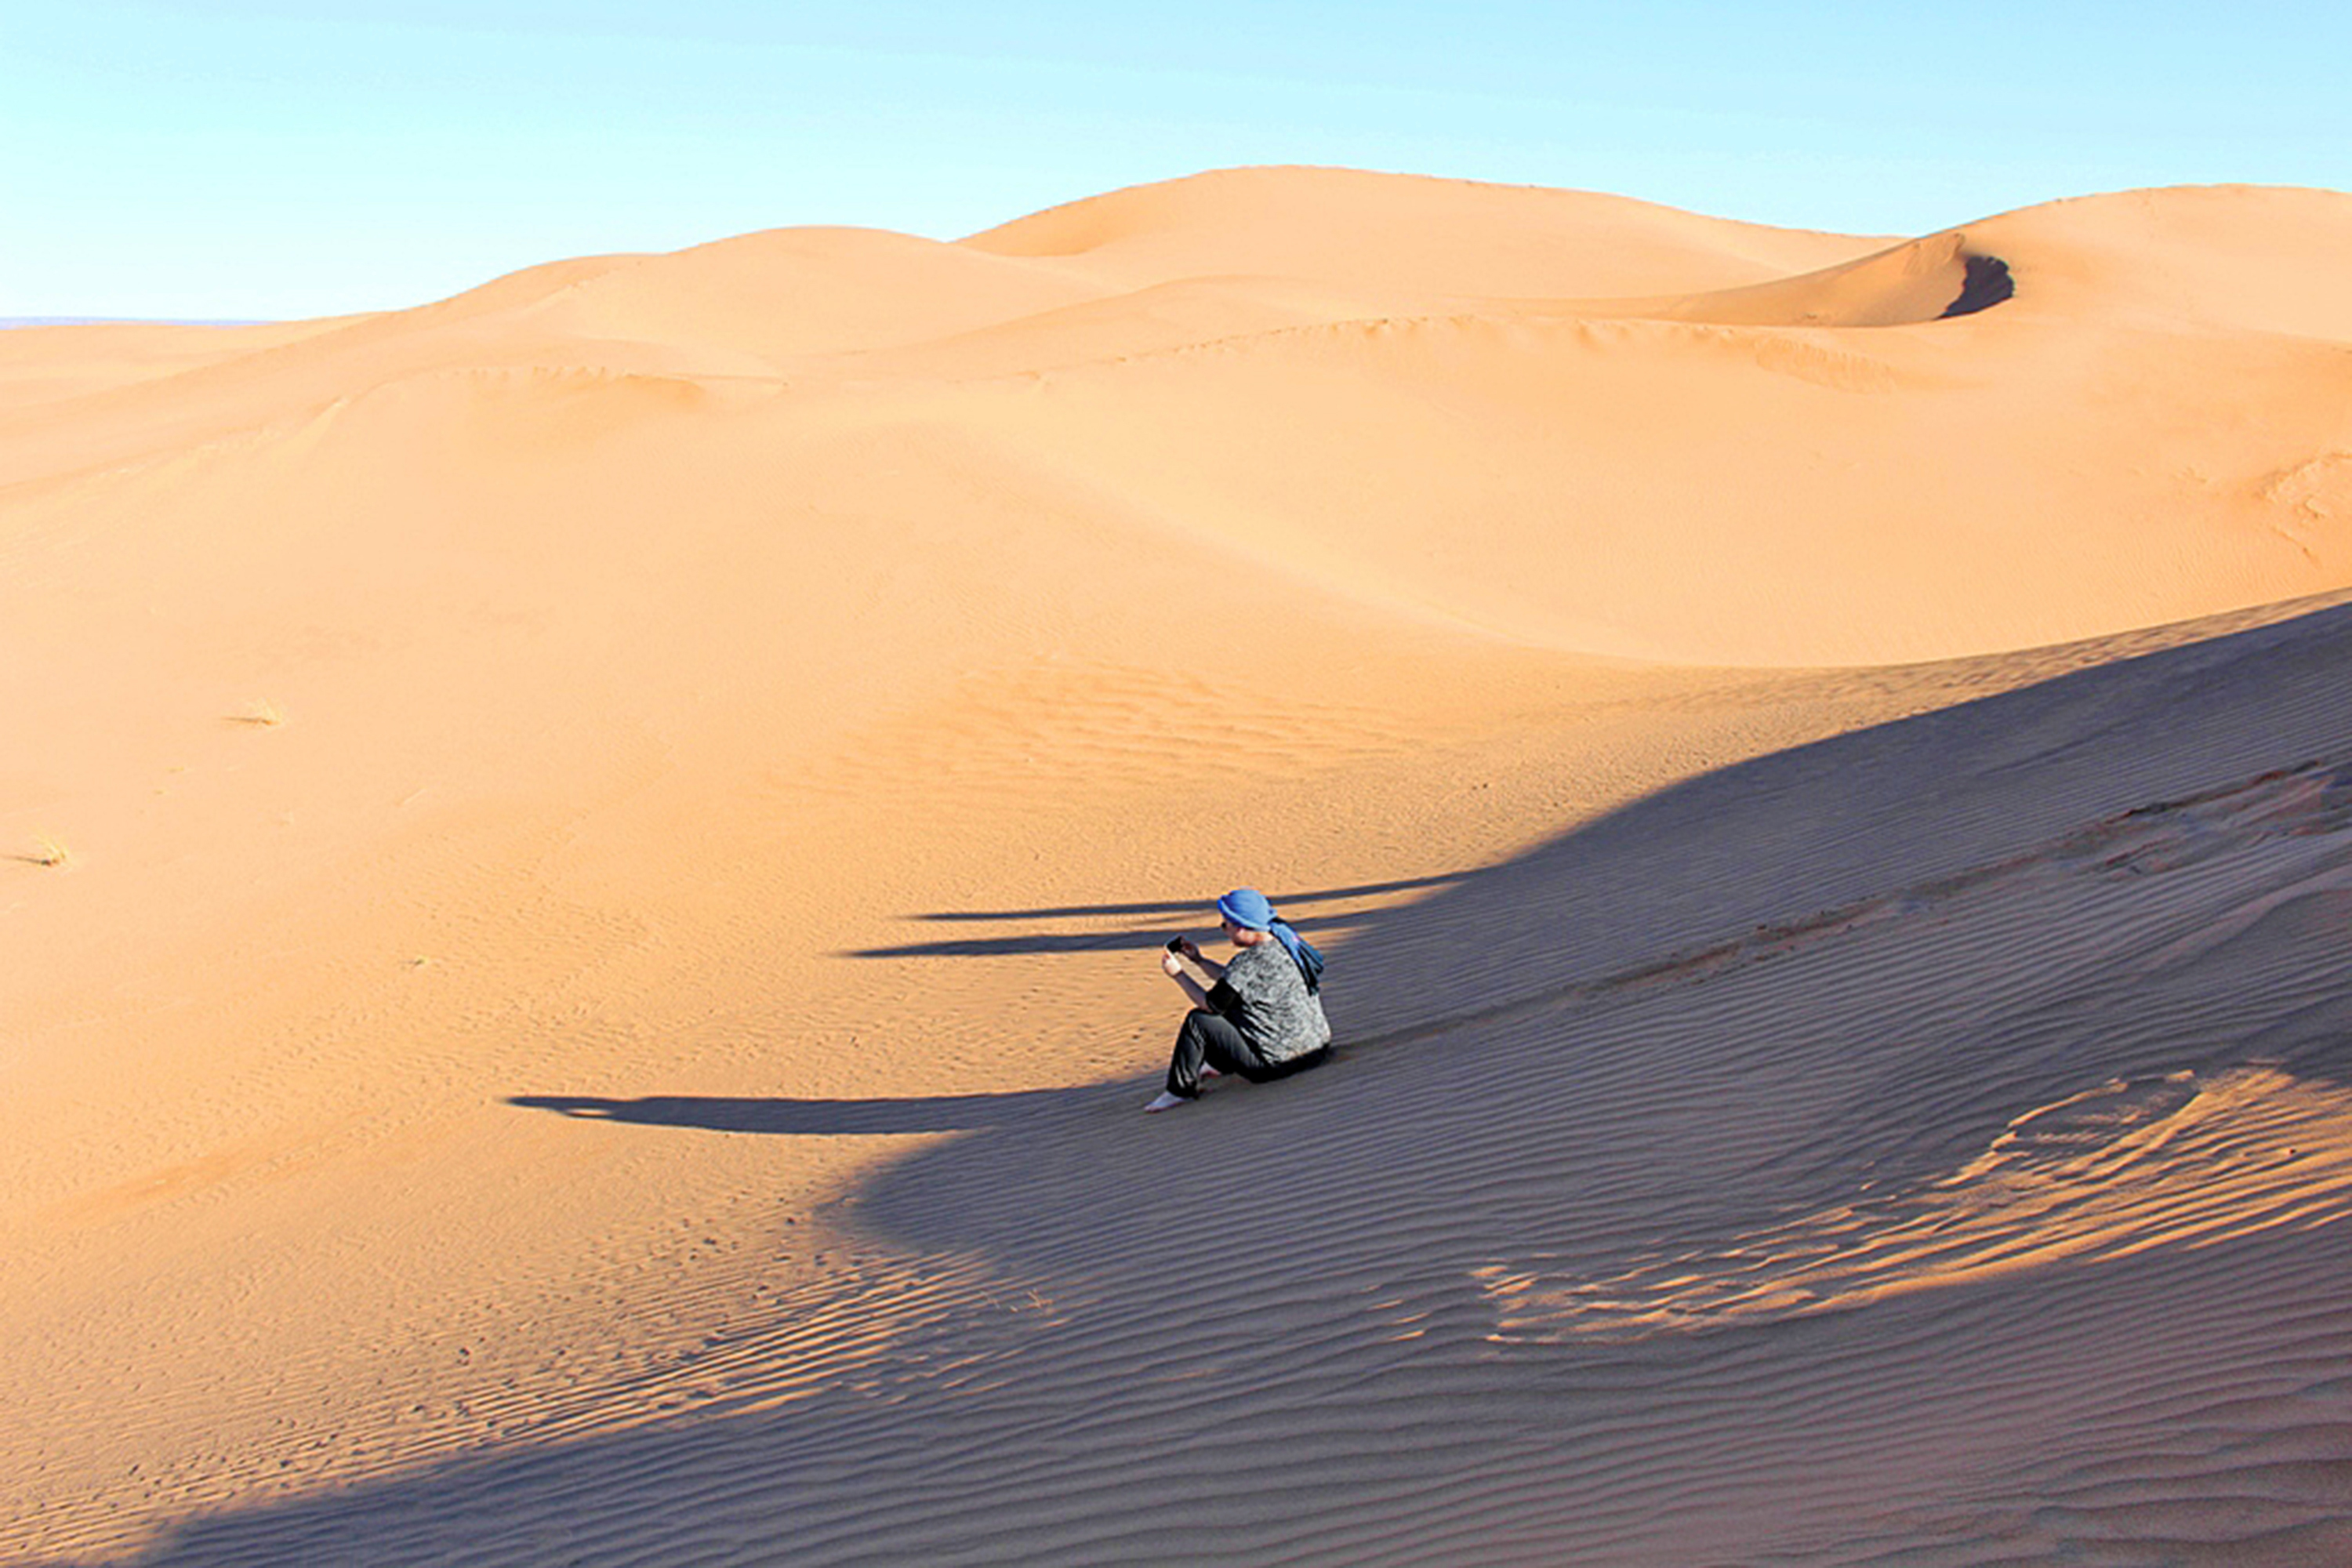 Wandern in der Sahara in Marokko